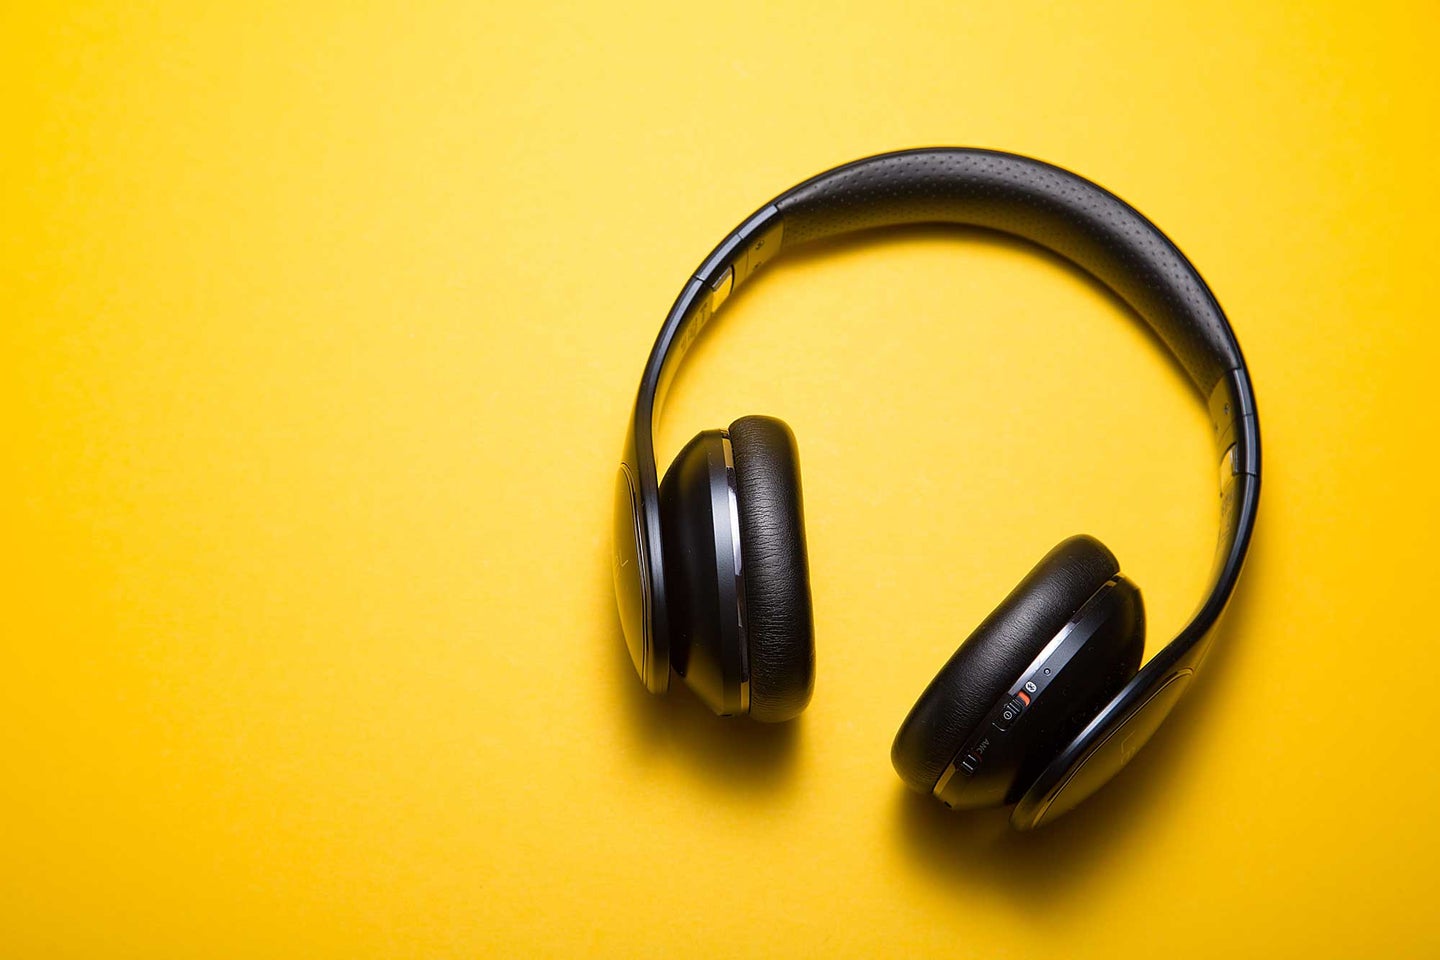 Headphones on yellow background